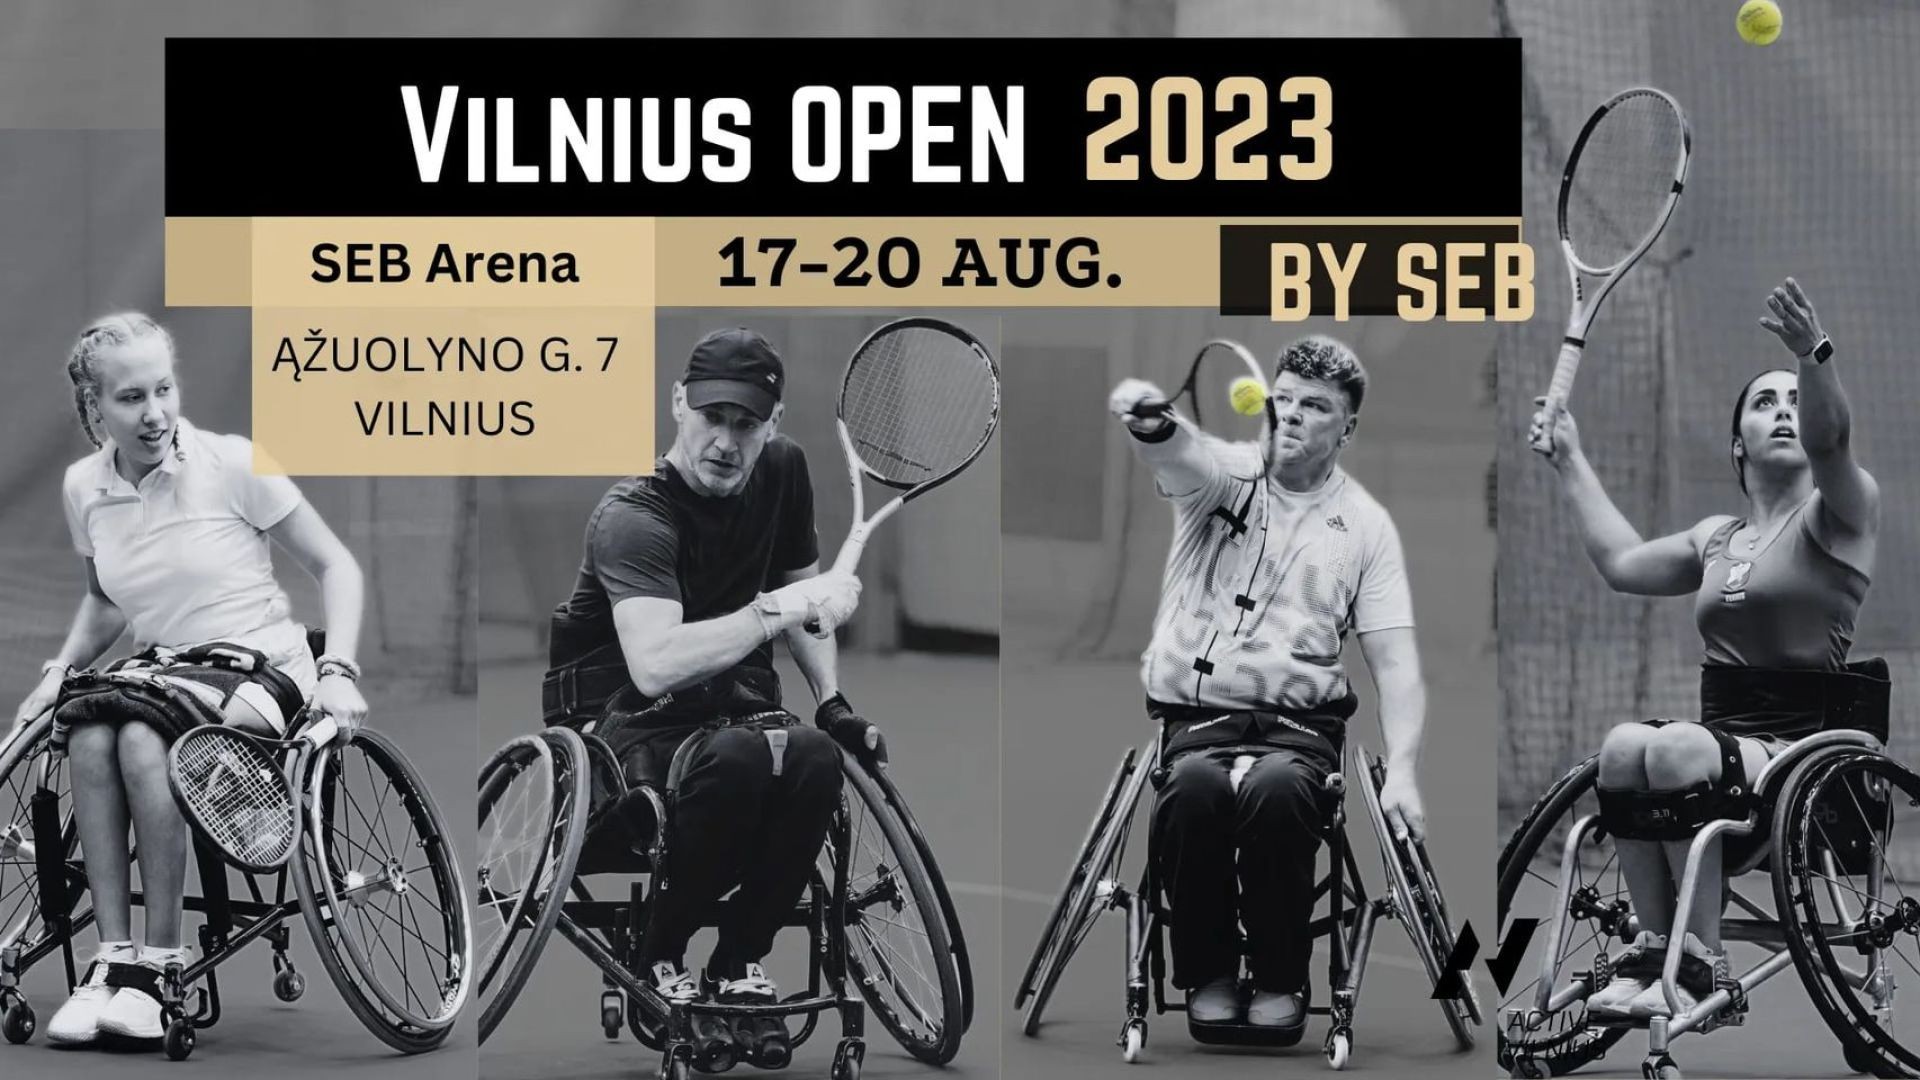 COURT 4 DAY 3 - VILNIIUS OPEN 2023 BY SEB